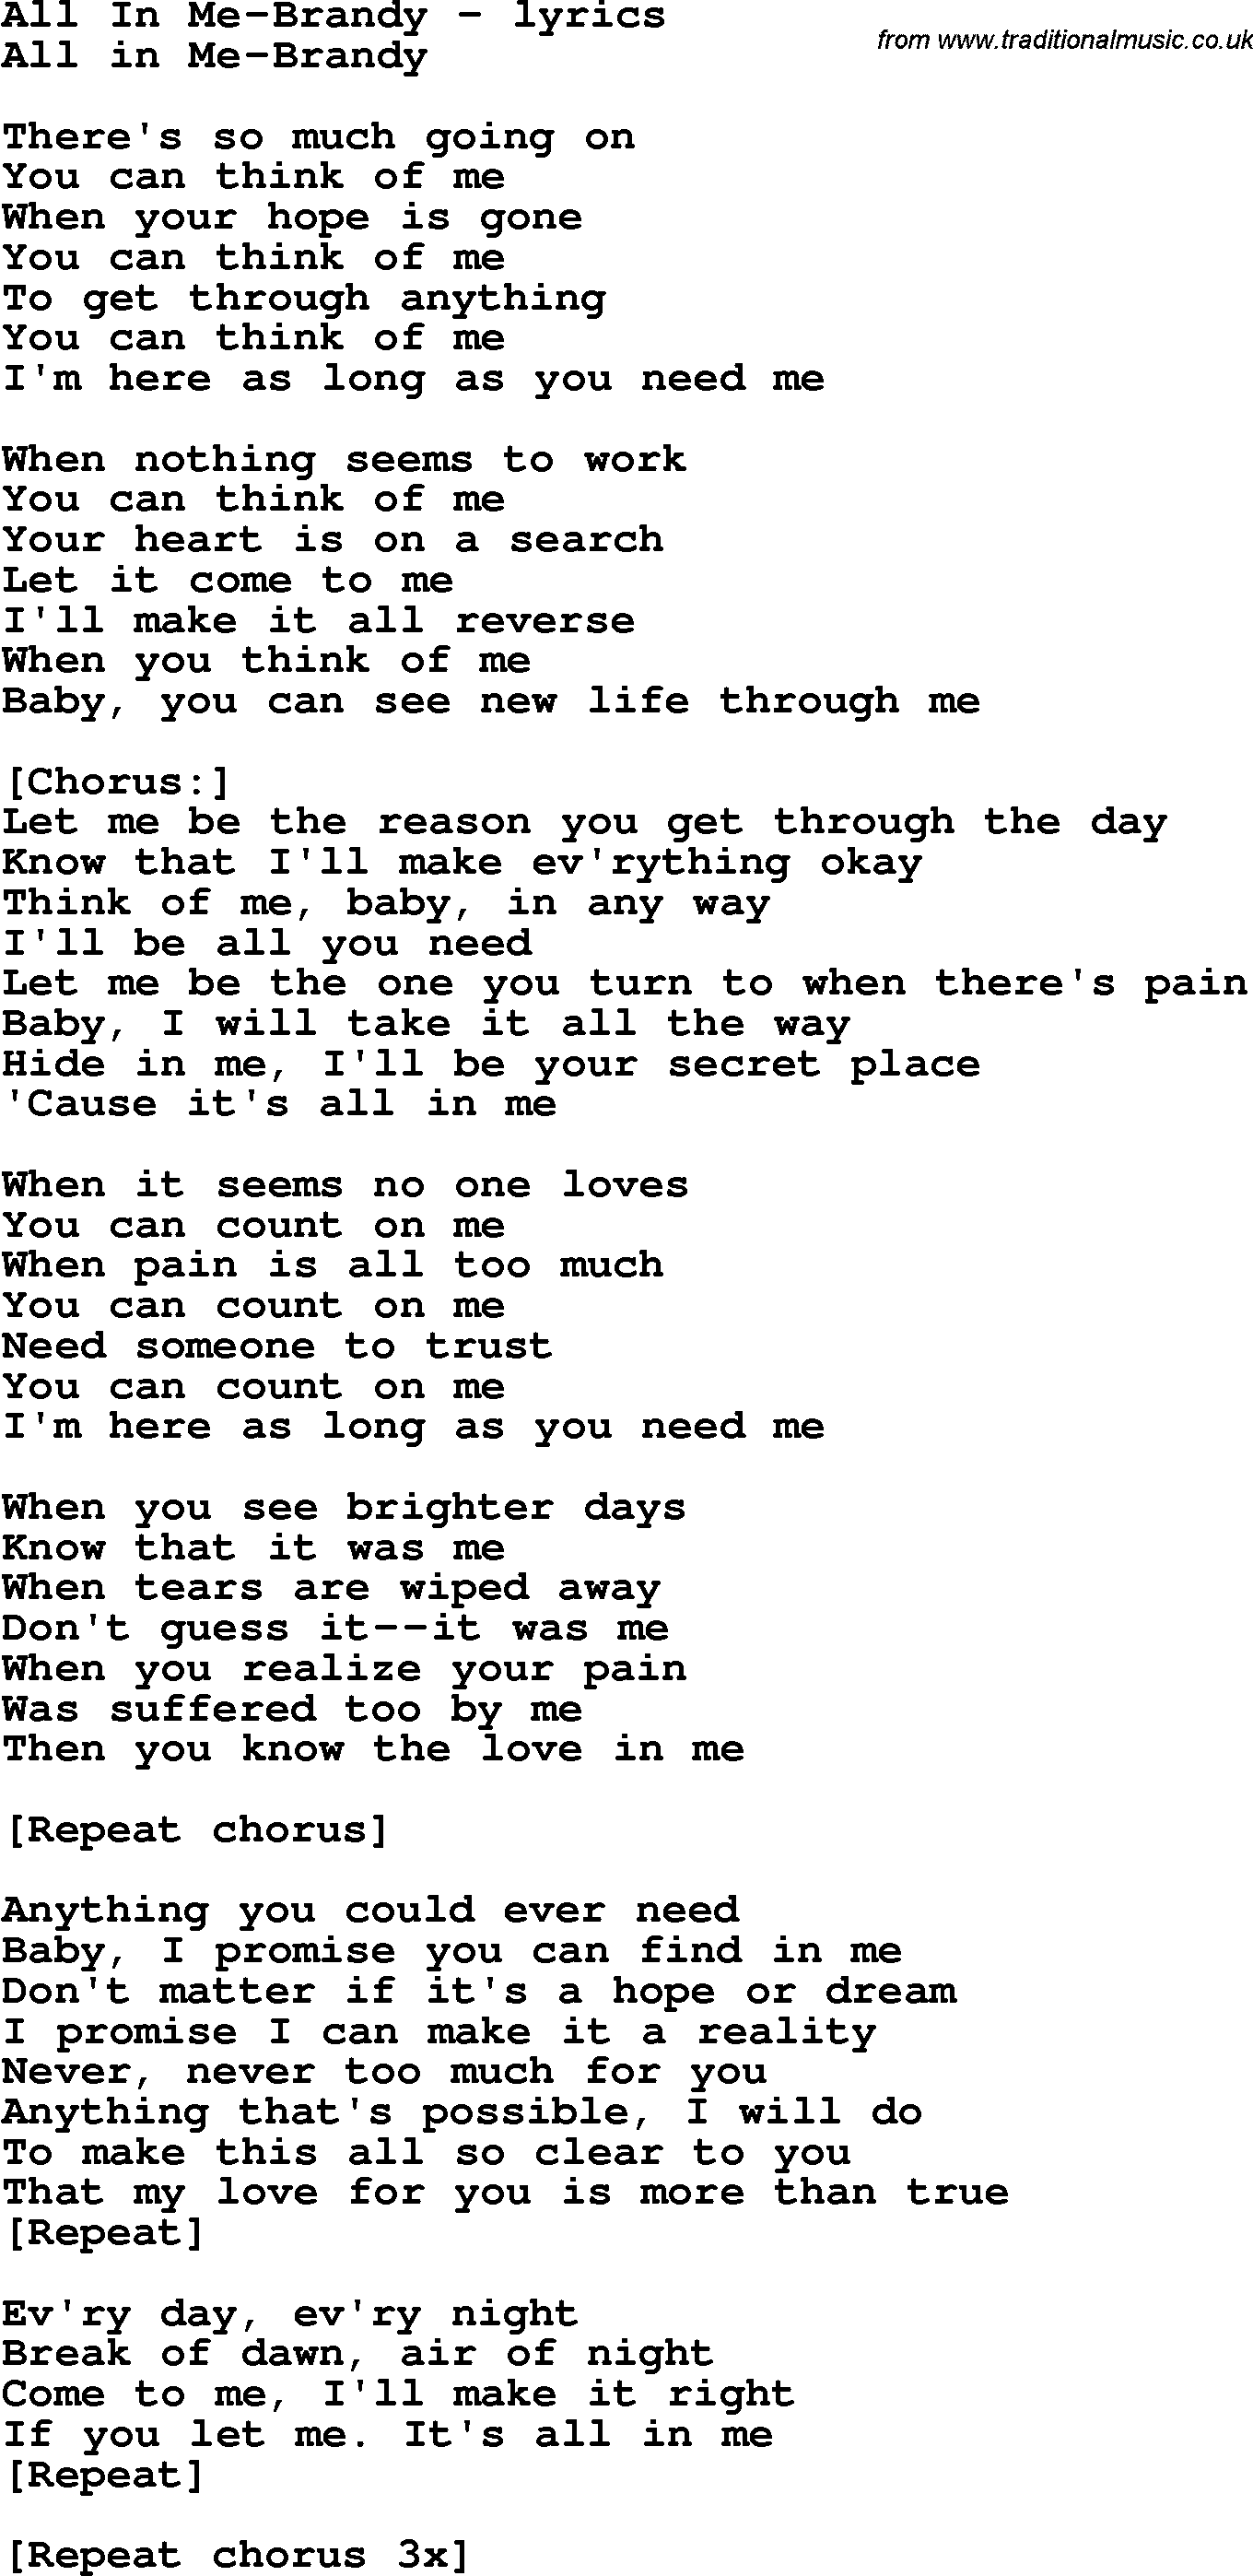 Love Song Lyrics for: All In Me-Brandy